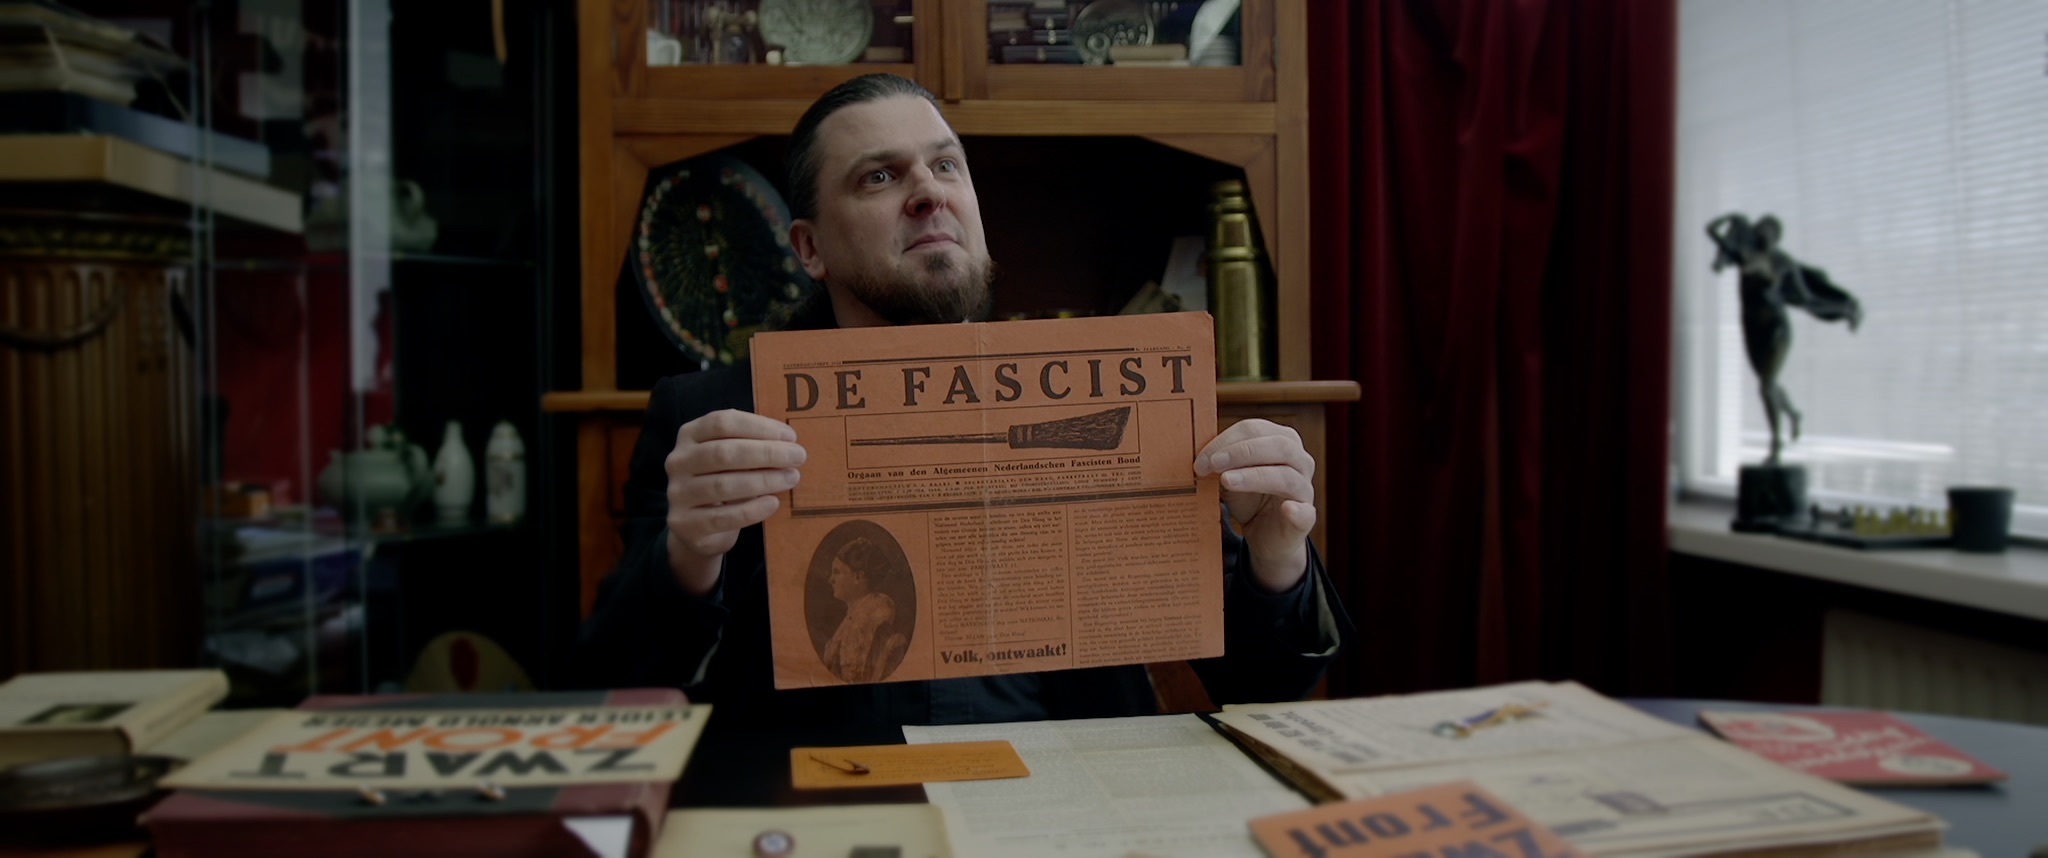 Fascism, Jan Baars, newspaper De Fascist, The Fascist, the people, Algemene Nederlandse Fascisten Bond, De Bezem, populism, collector